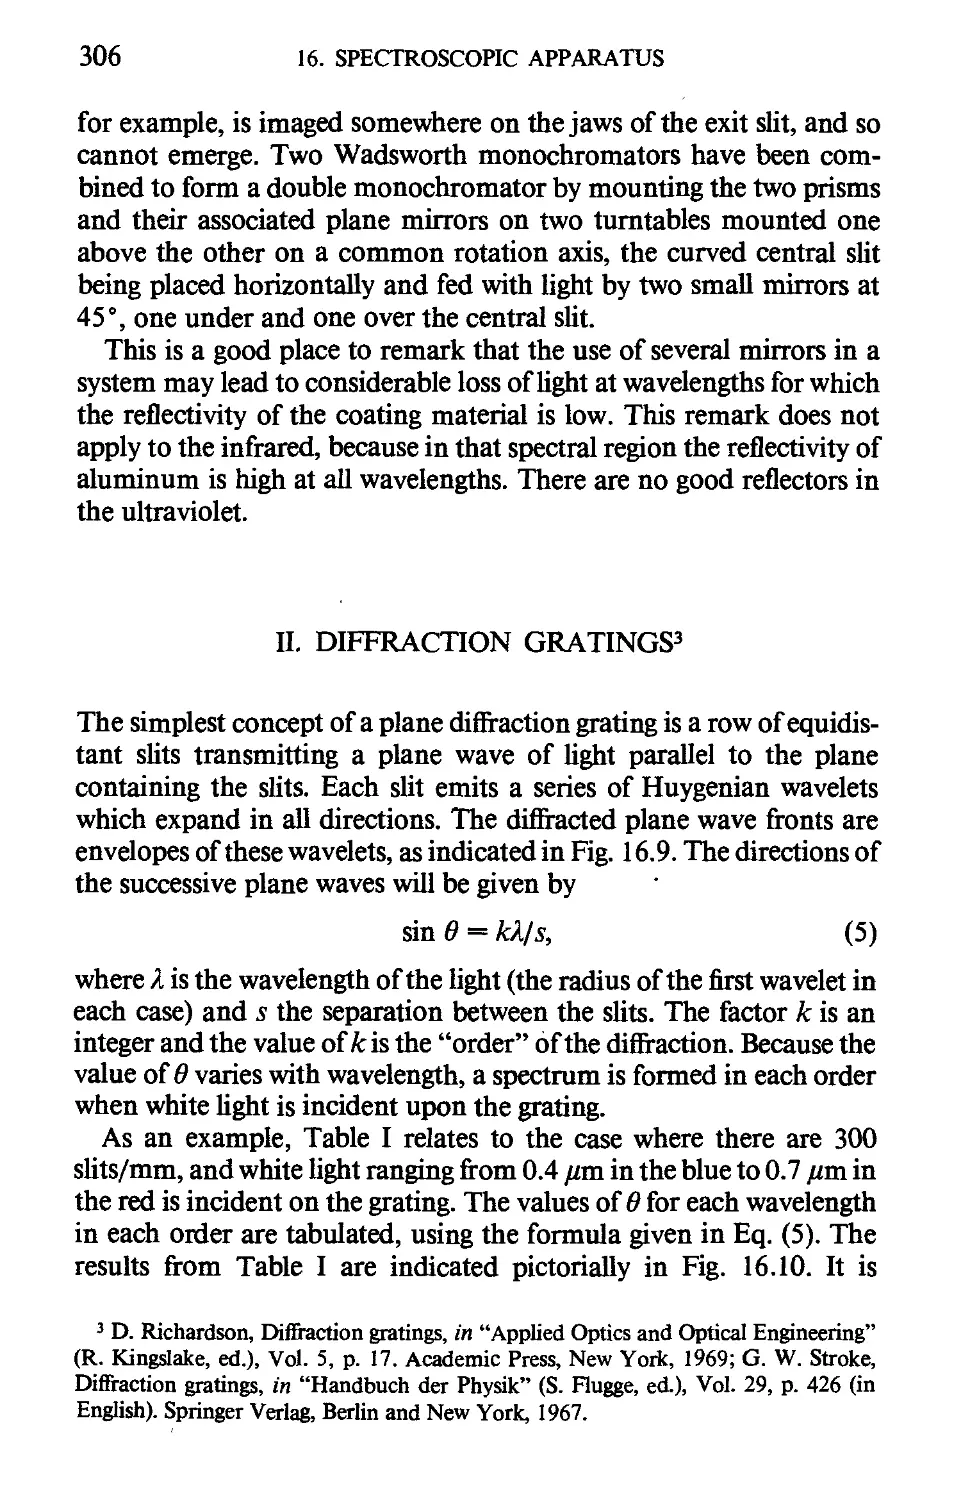 II. Diffraction Gratings